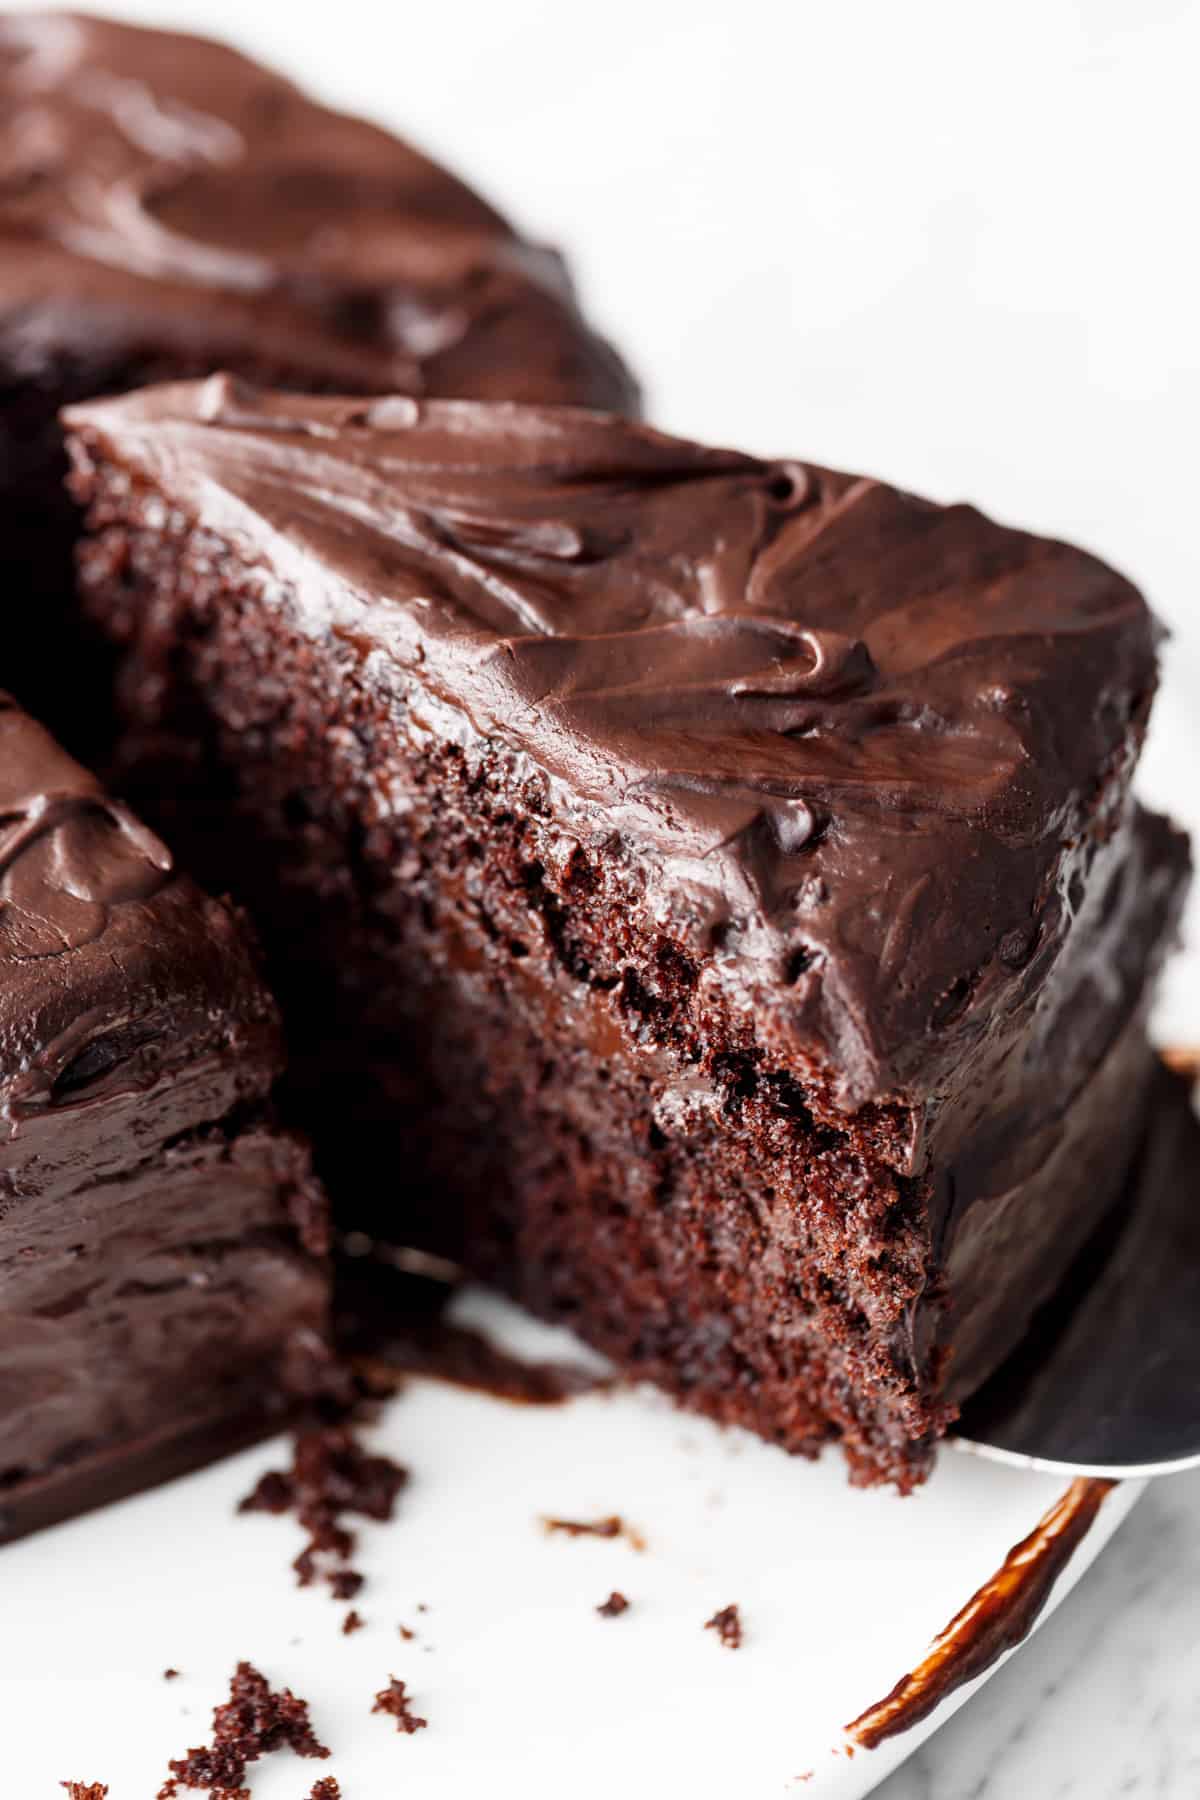 Classic and Easy Chocolate Cake Recipe